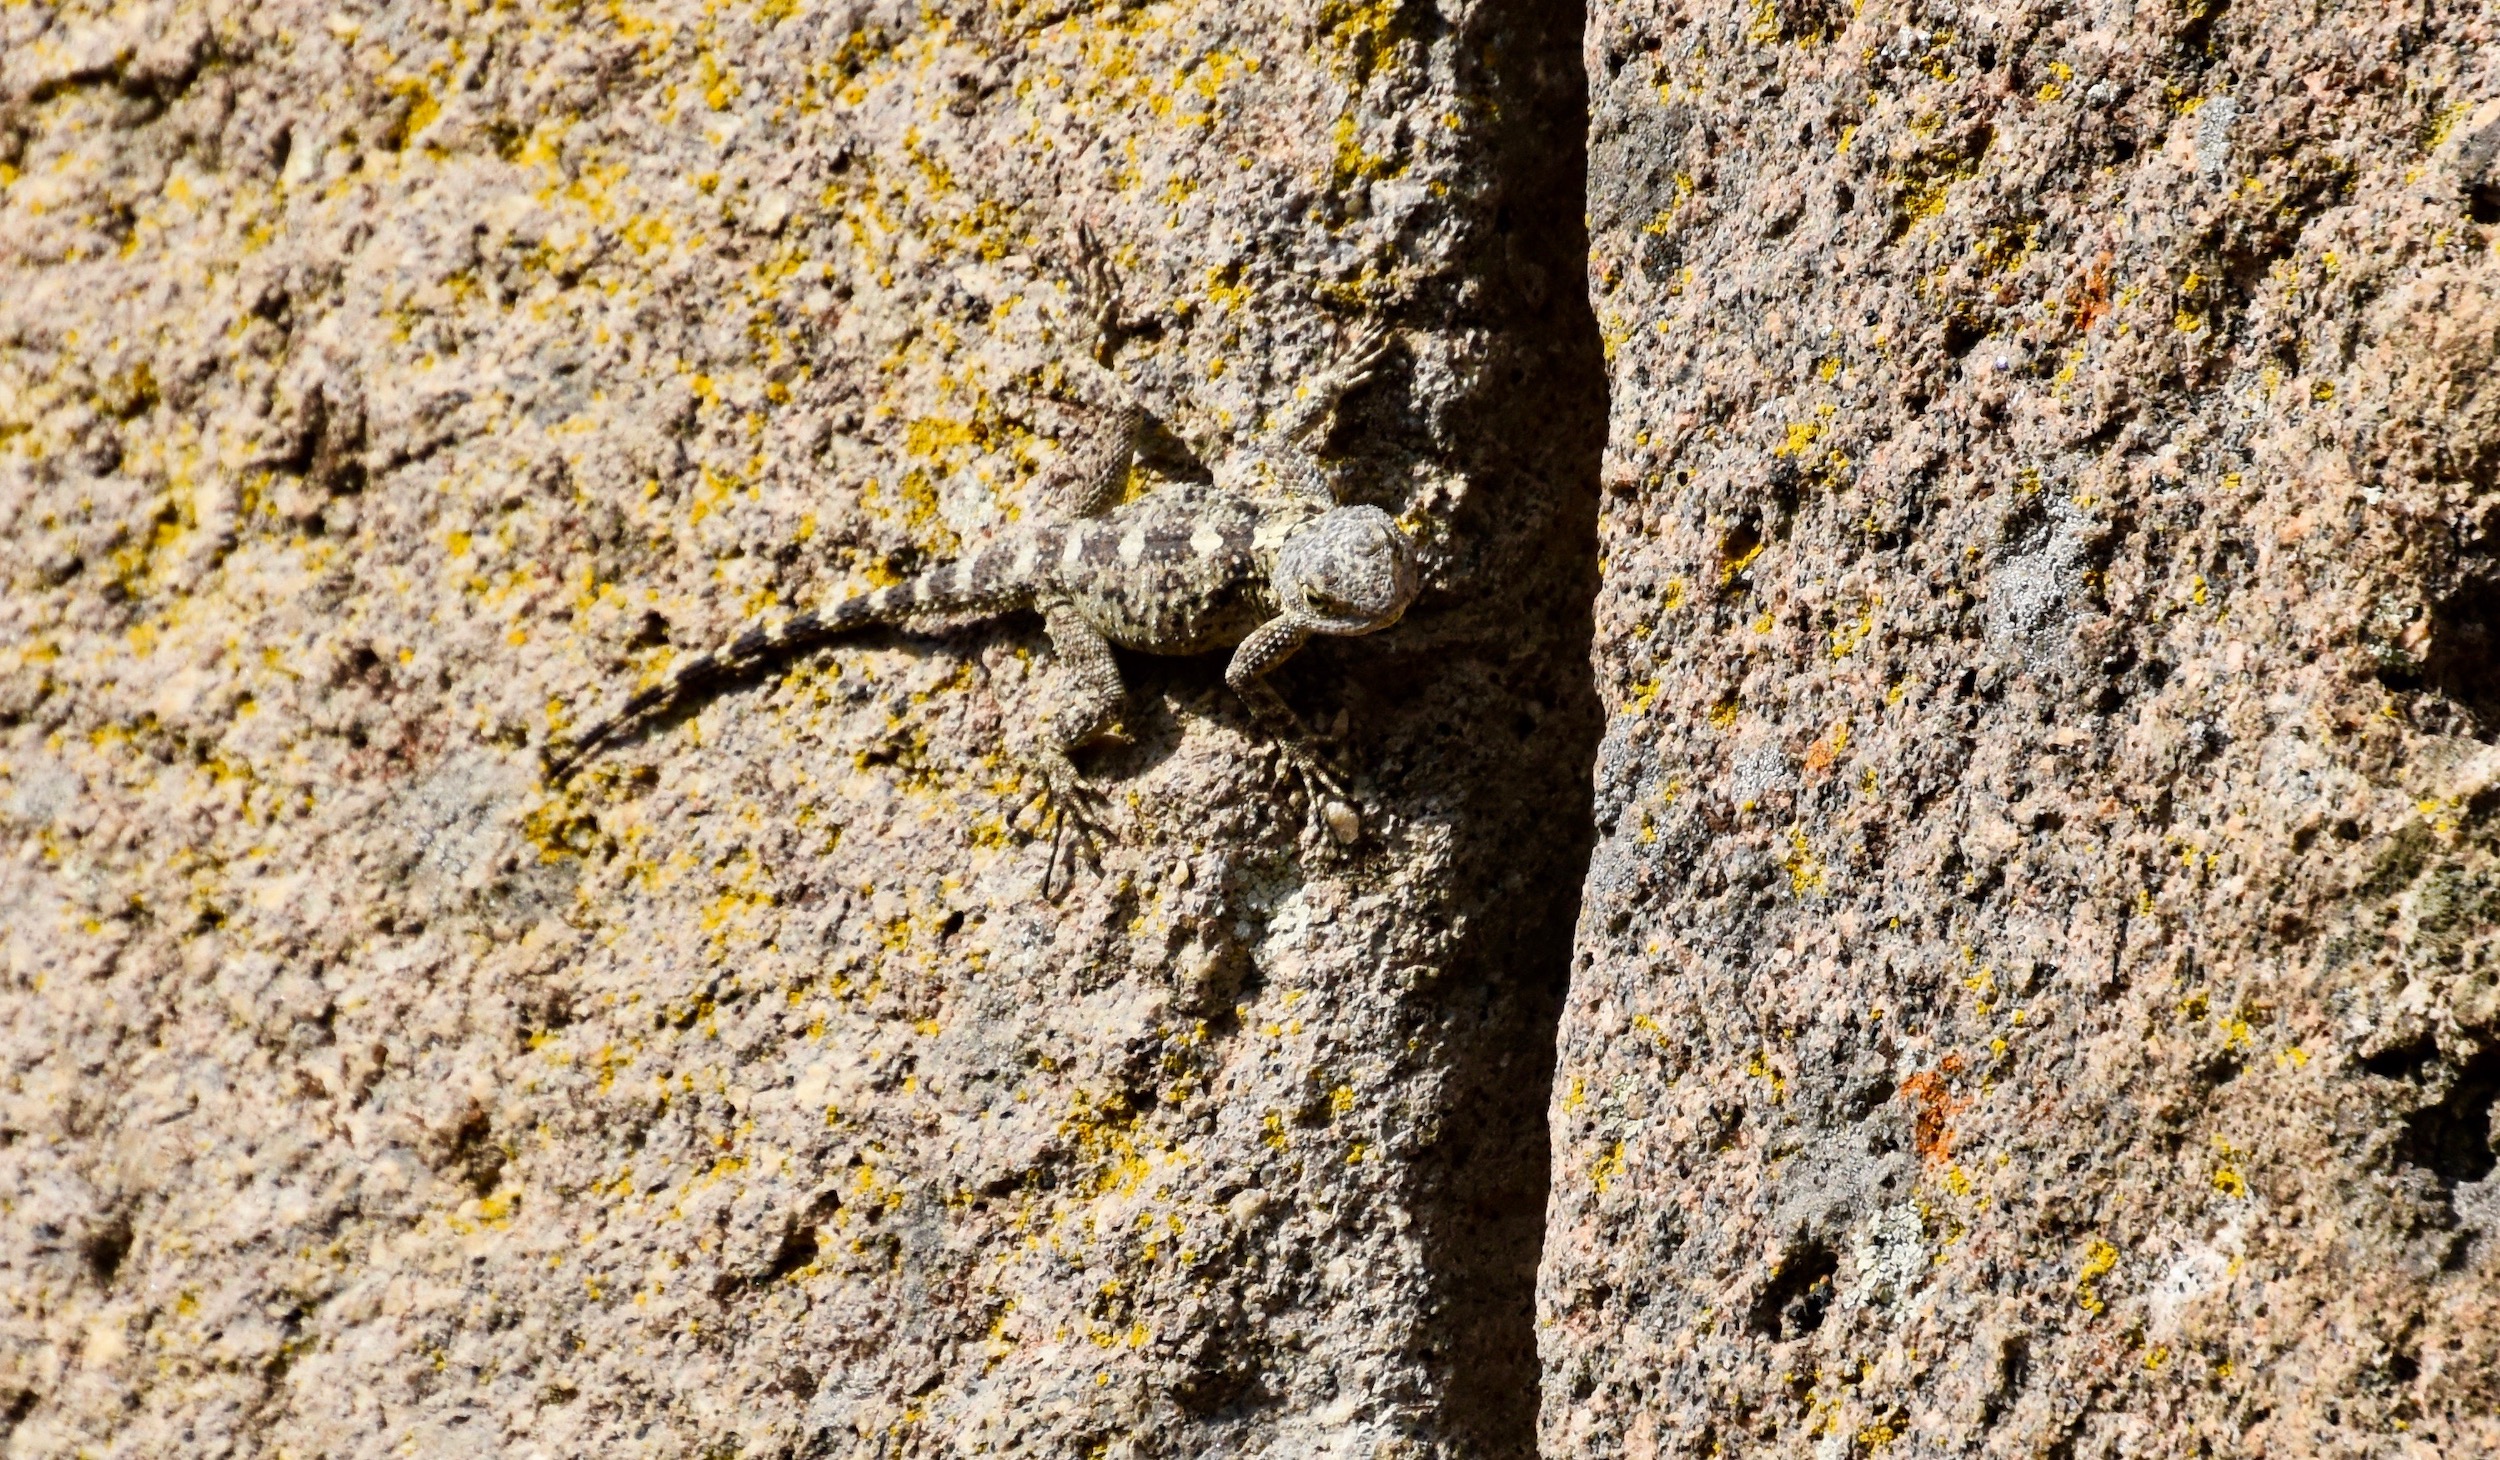 Lizard at the Galen Asclepeion